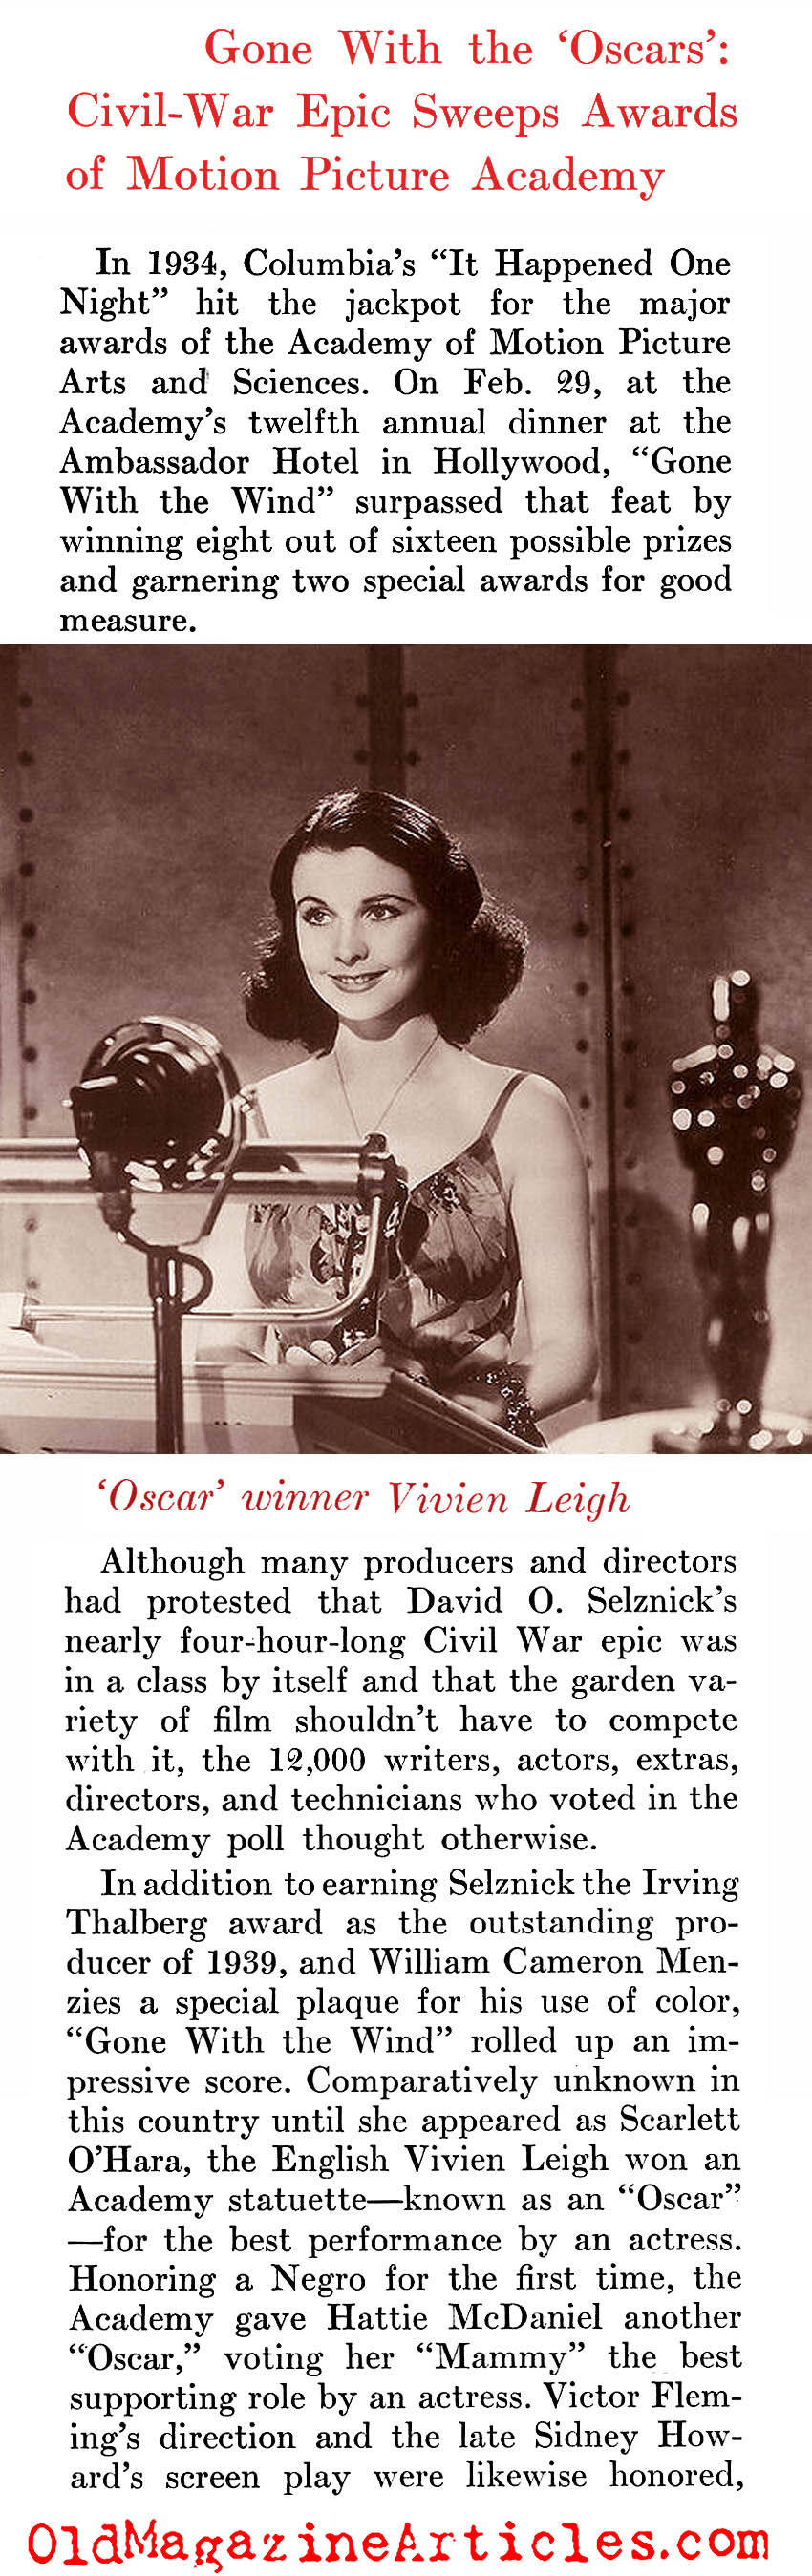 A Sweep at the Oscars (Newsweek Magazine, 1940)